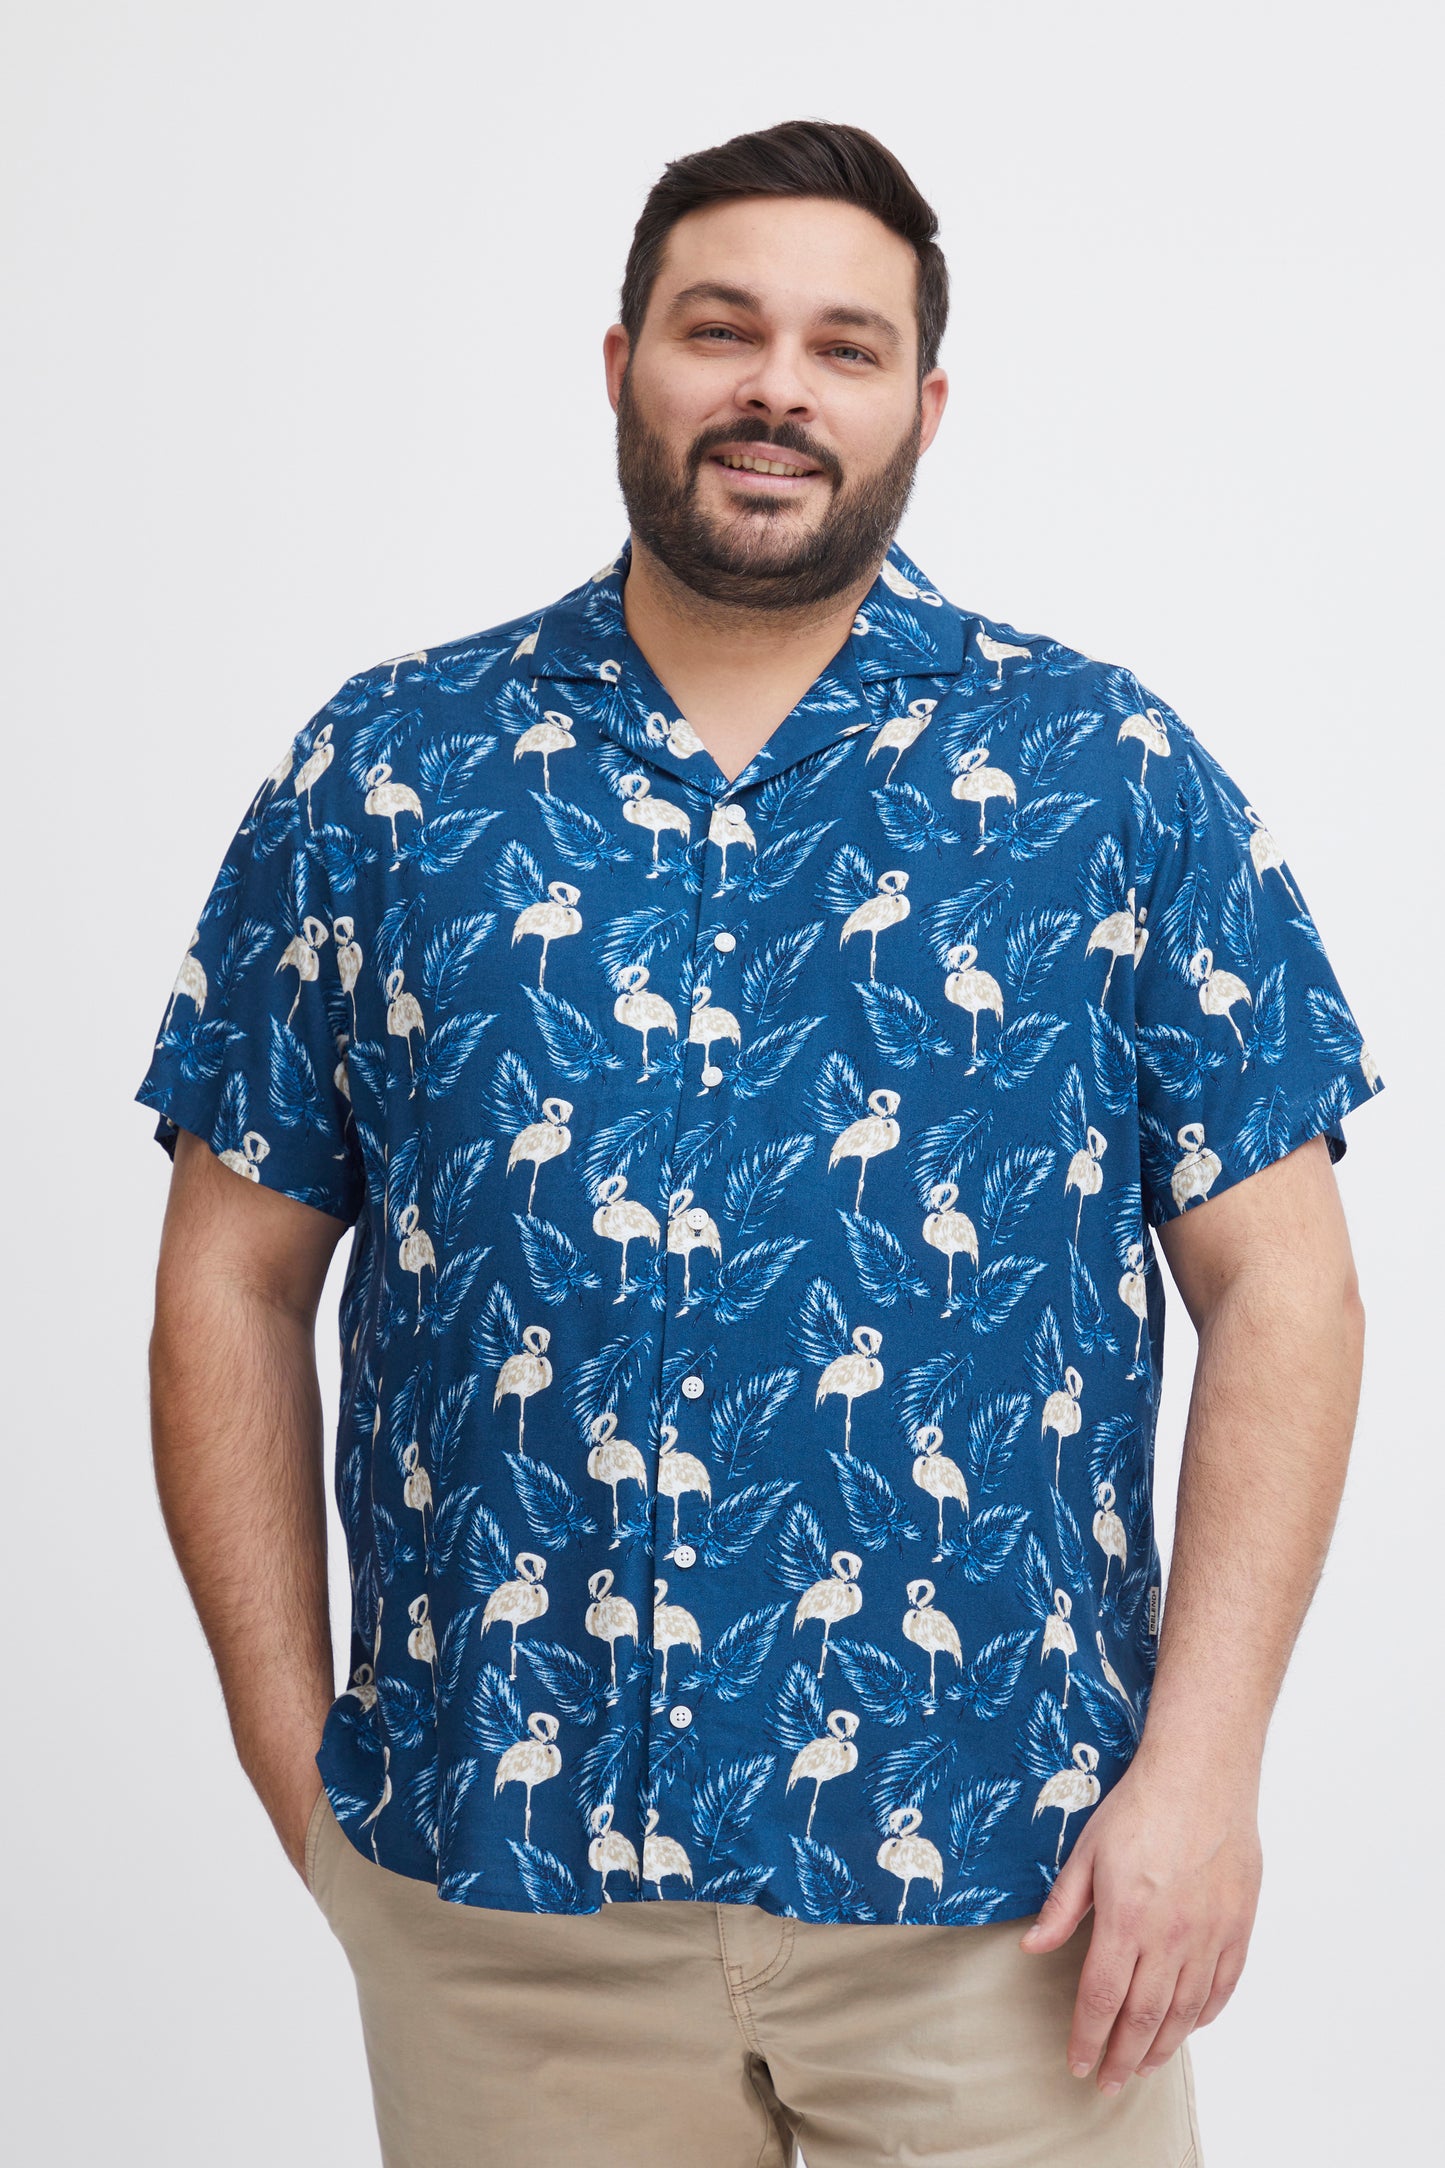 BigMens Hawaiian Print Shirts - Blue Flamingo